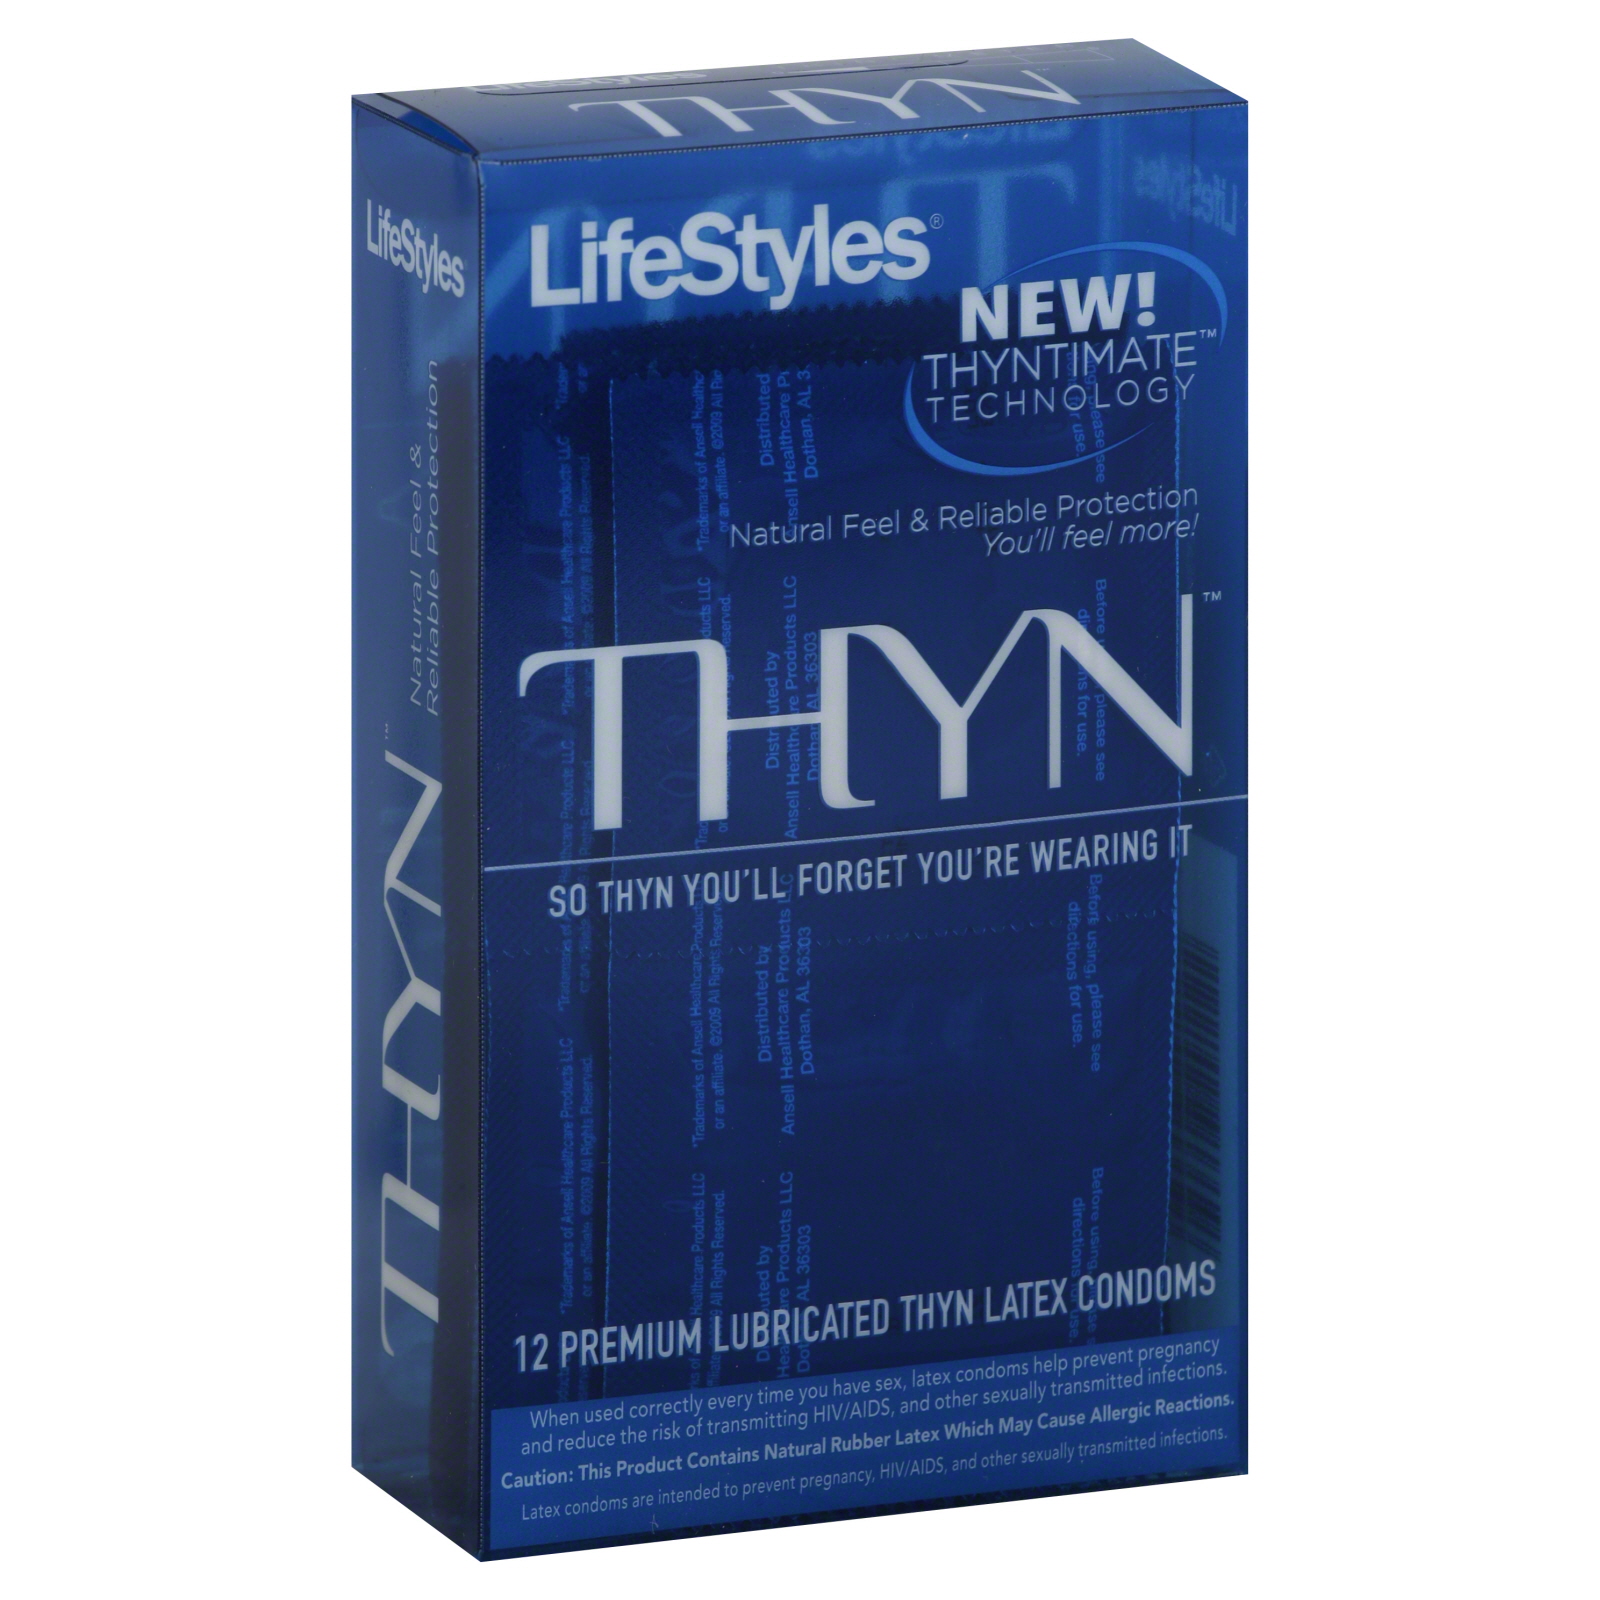 LifeStyles Thyn Thyntimate Technology Premium Lubricated Thyn Latex Condoms - 12 CT